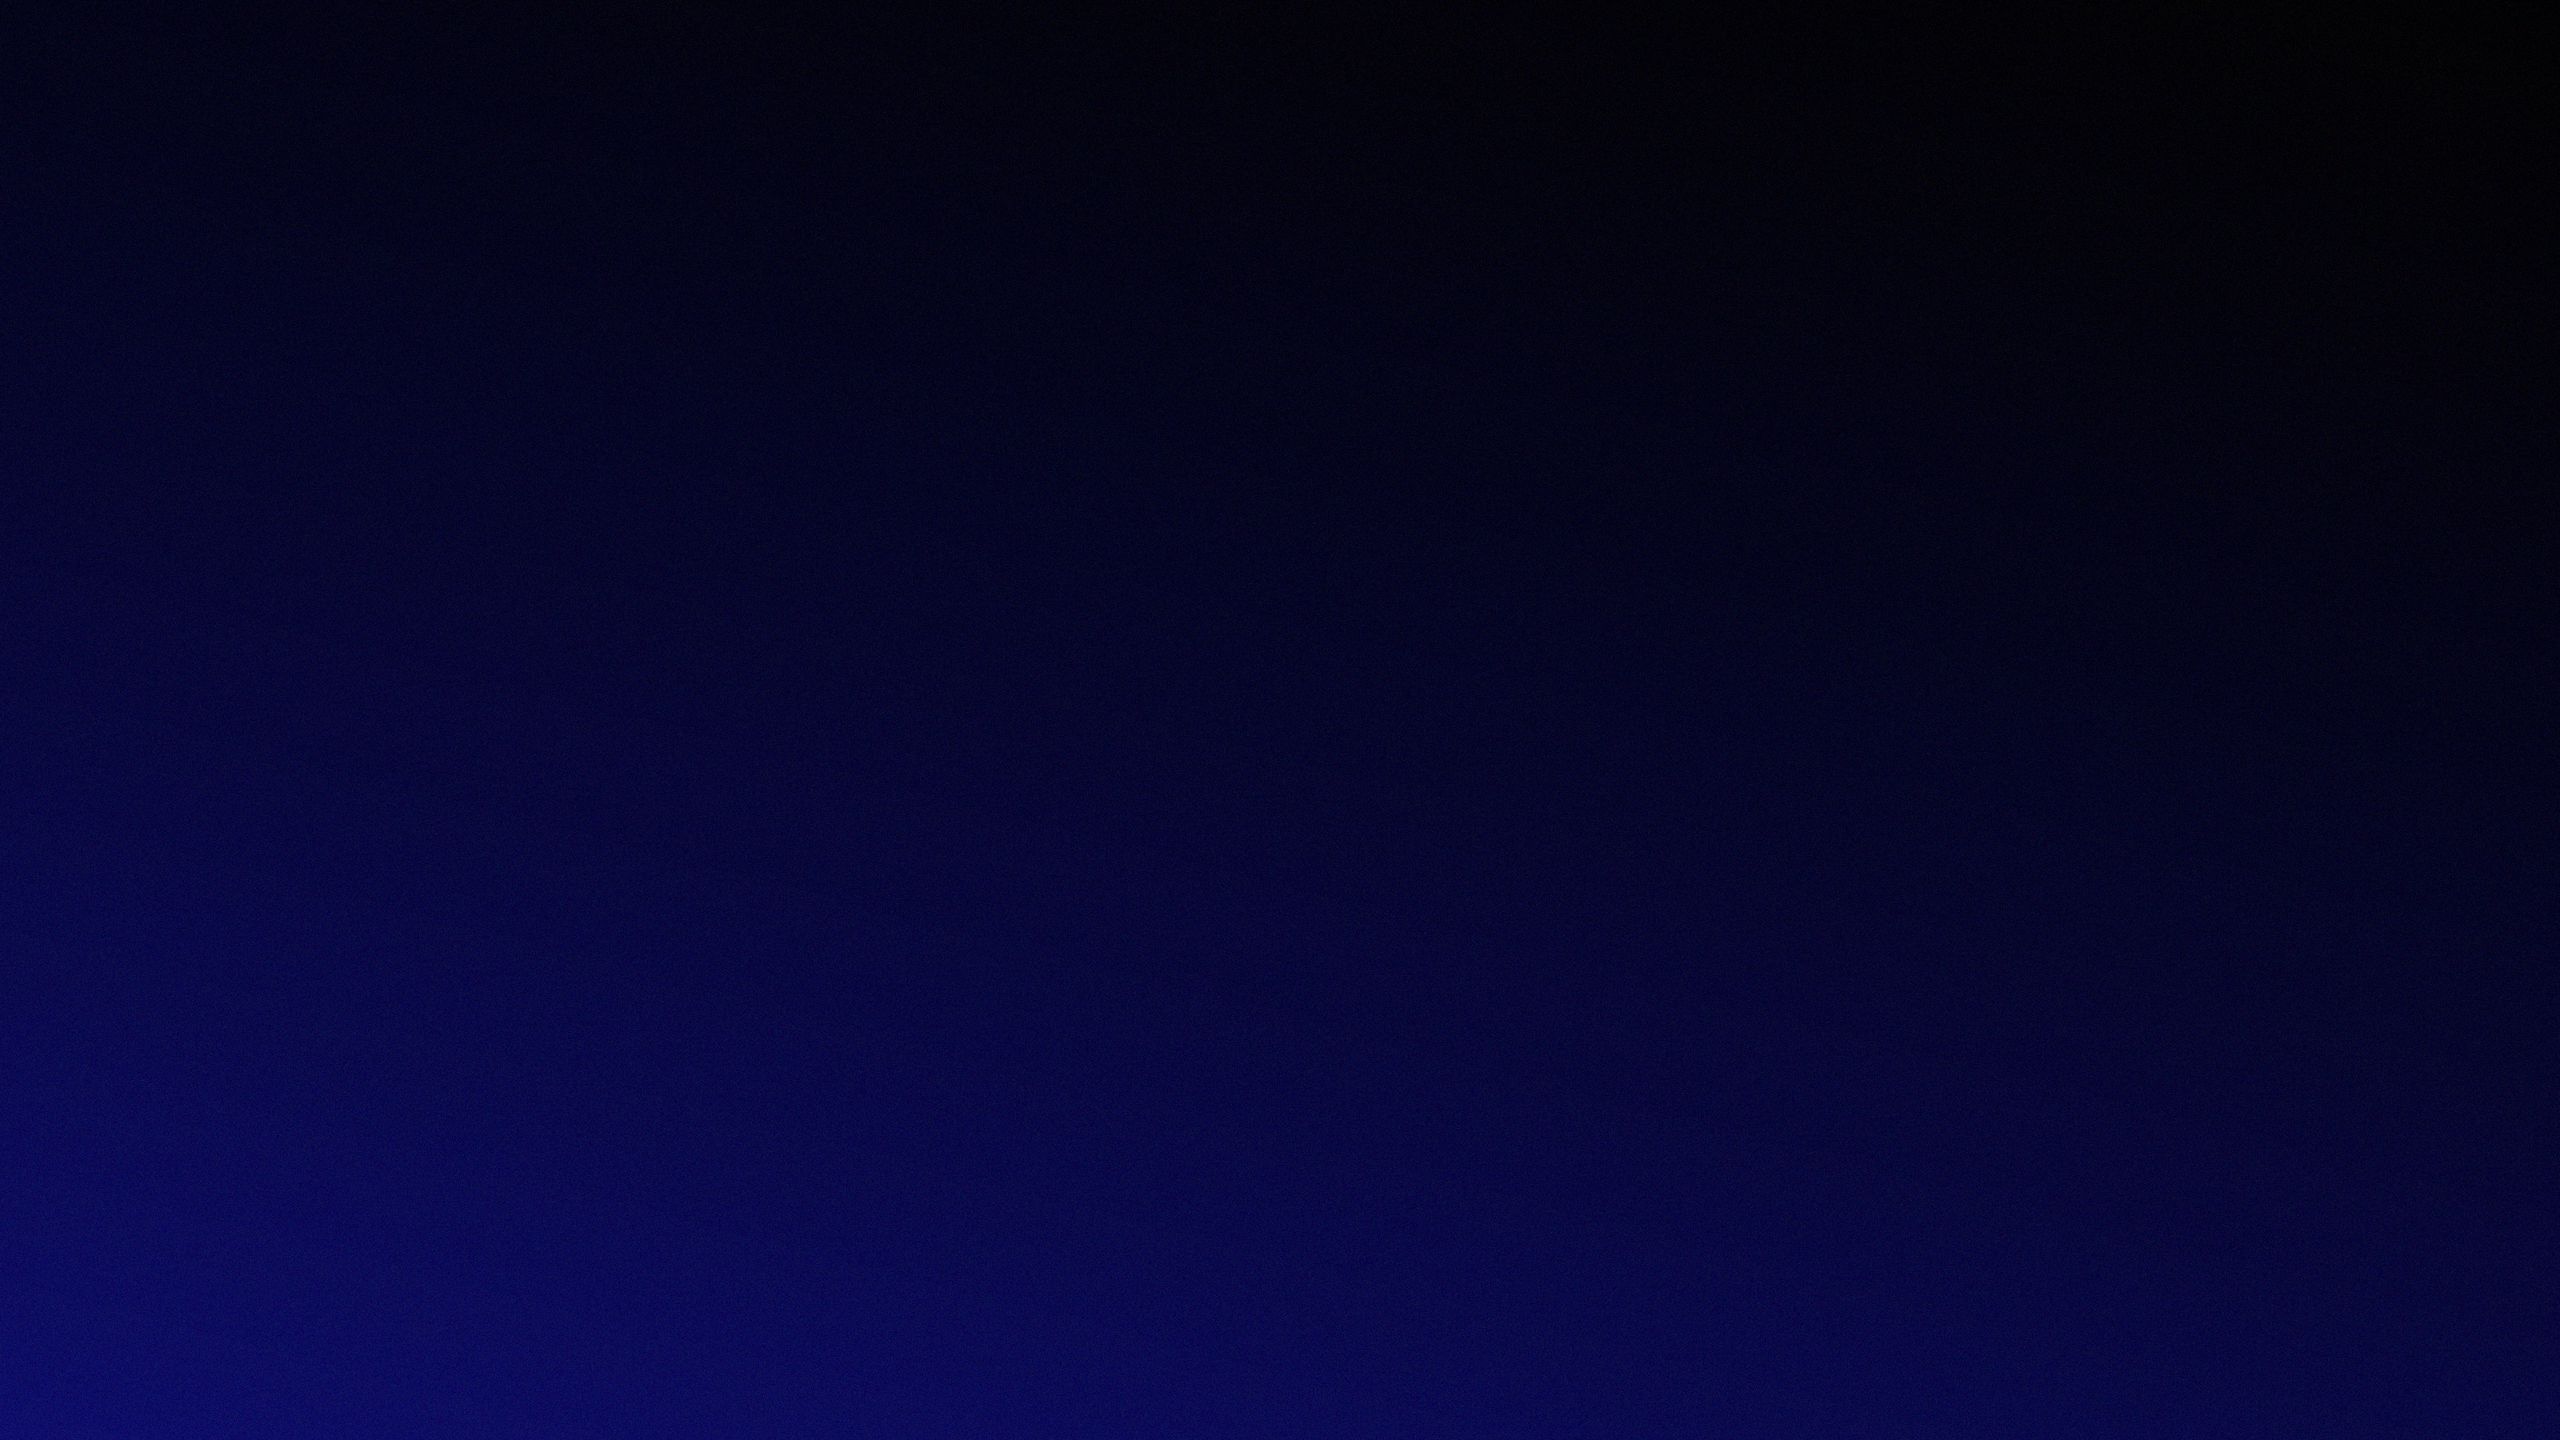 2560x1440 Dark Blue Solid Color Background